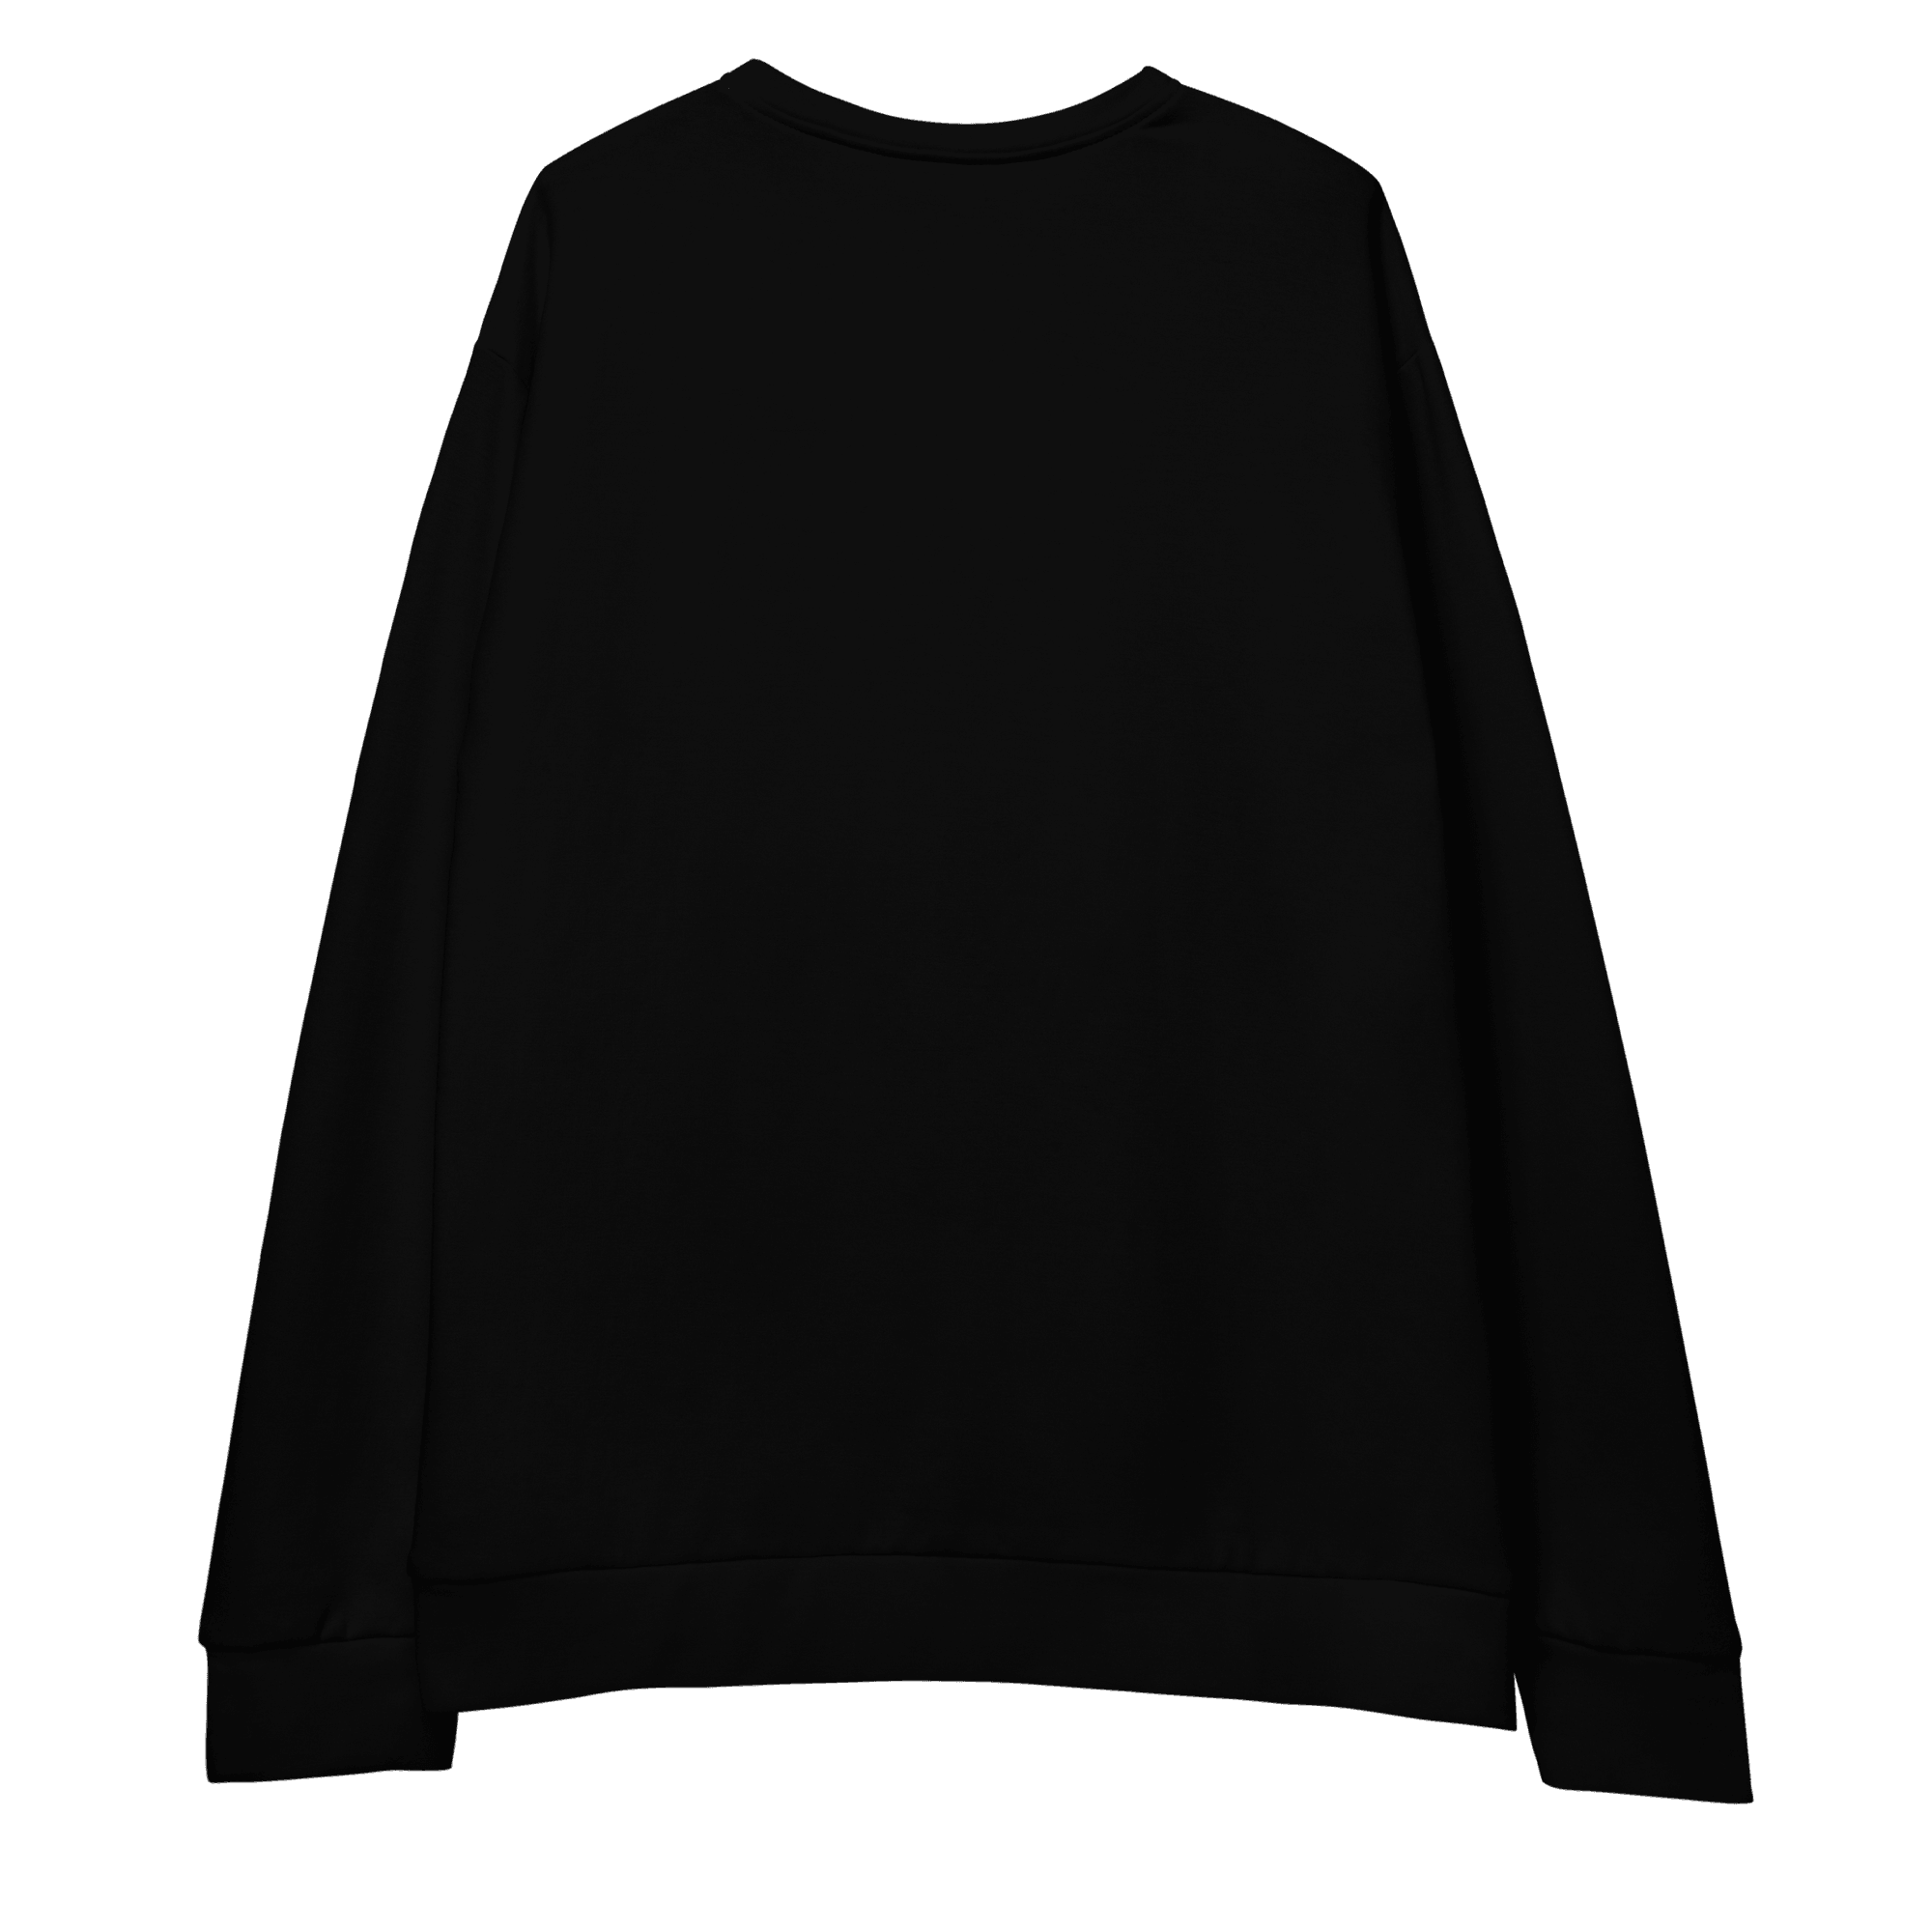 Virino® Unisex Sweatshirt (7 pieces for sale) - Kikillo Club